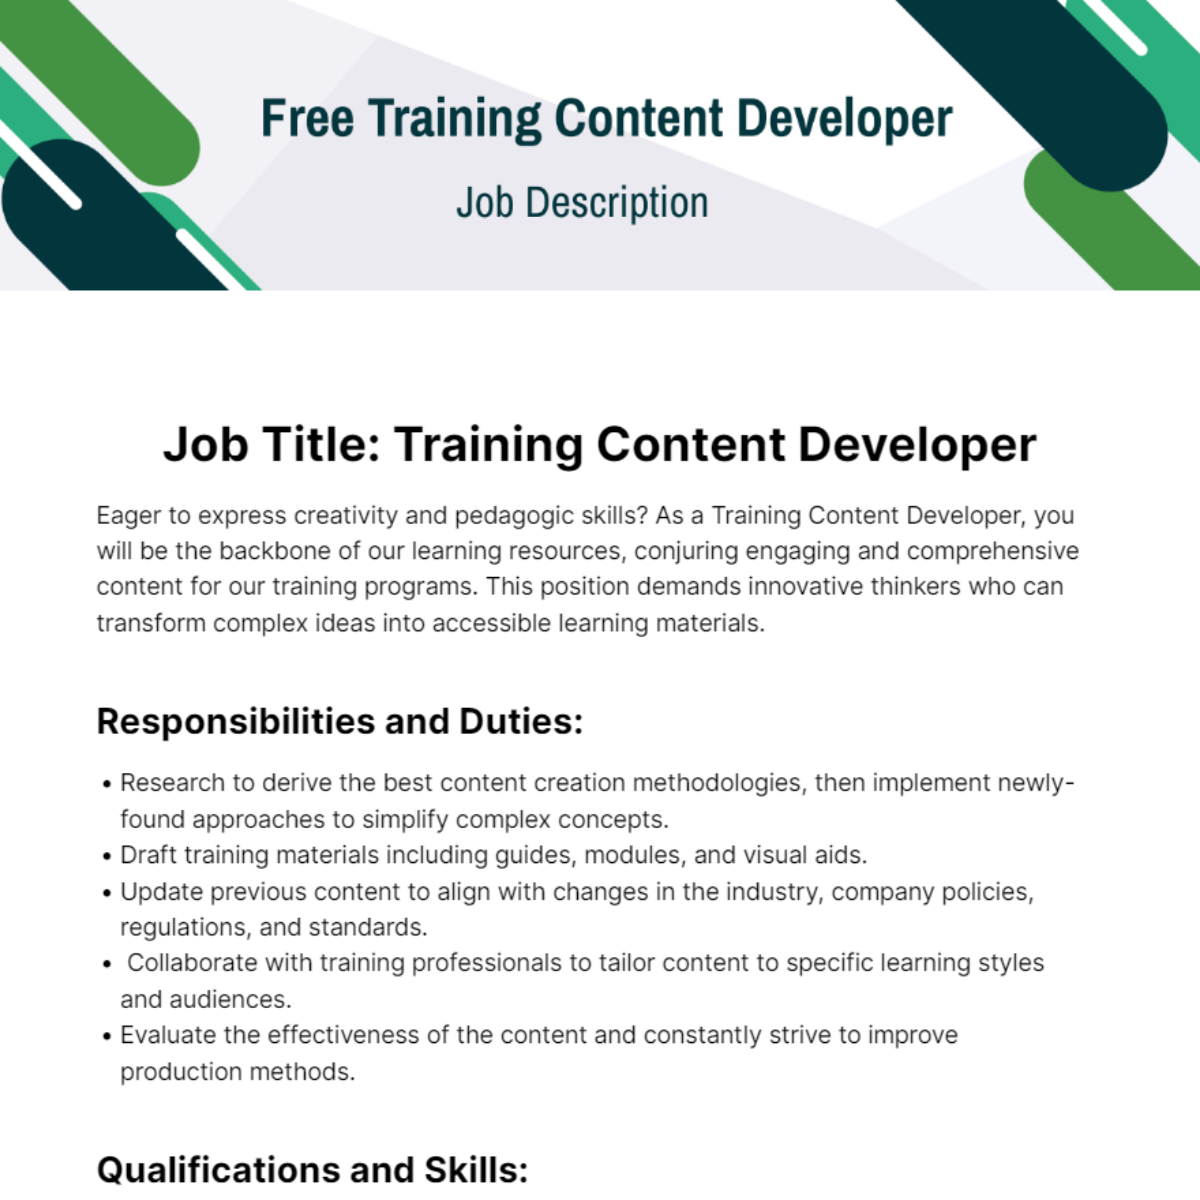 Free Training Content Developer Job Description Template